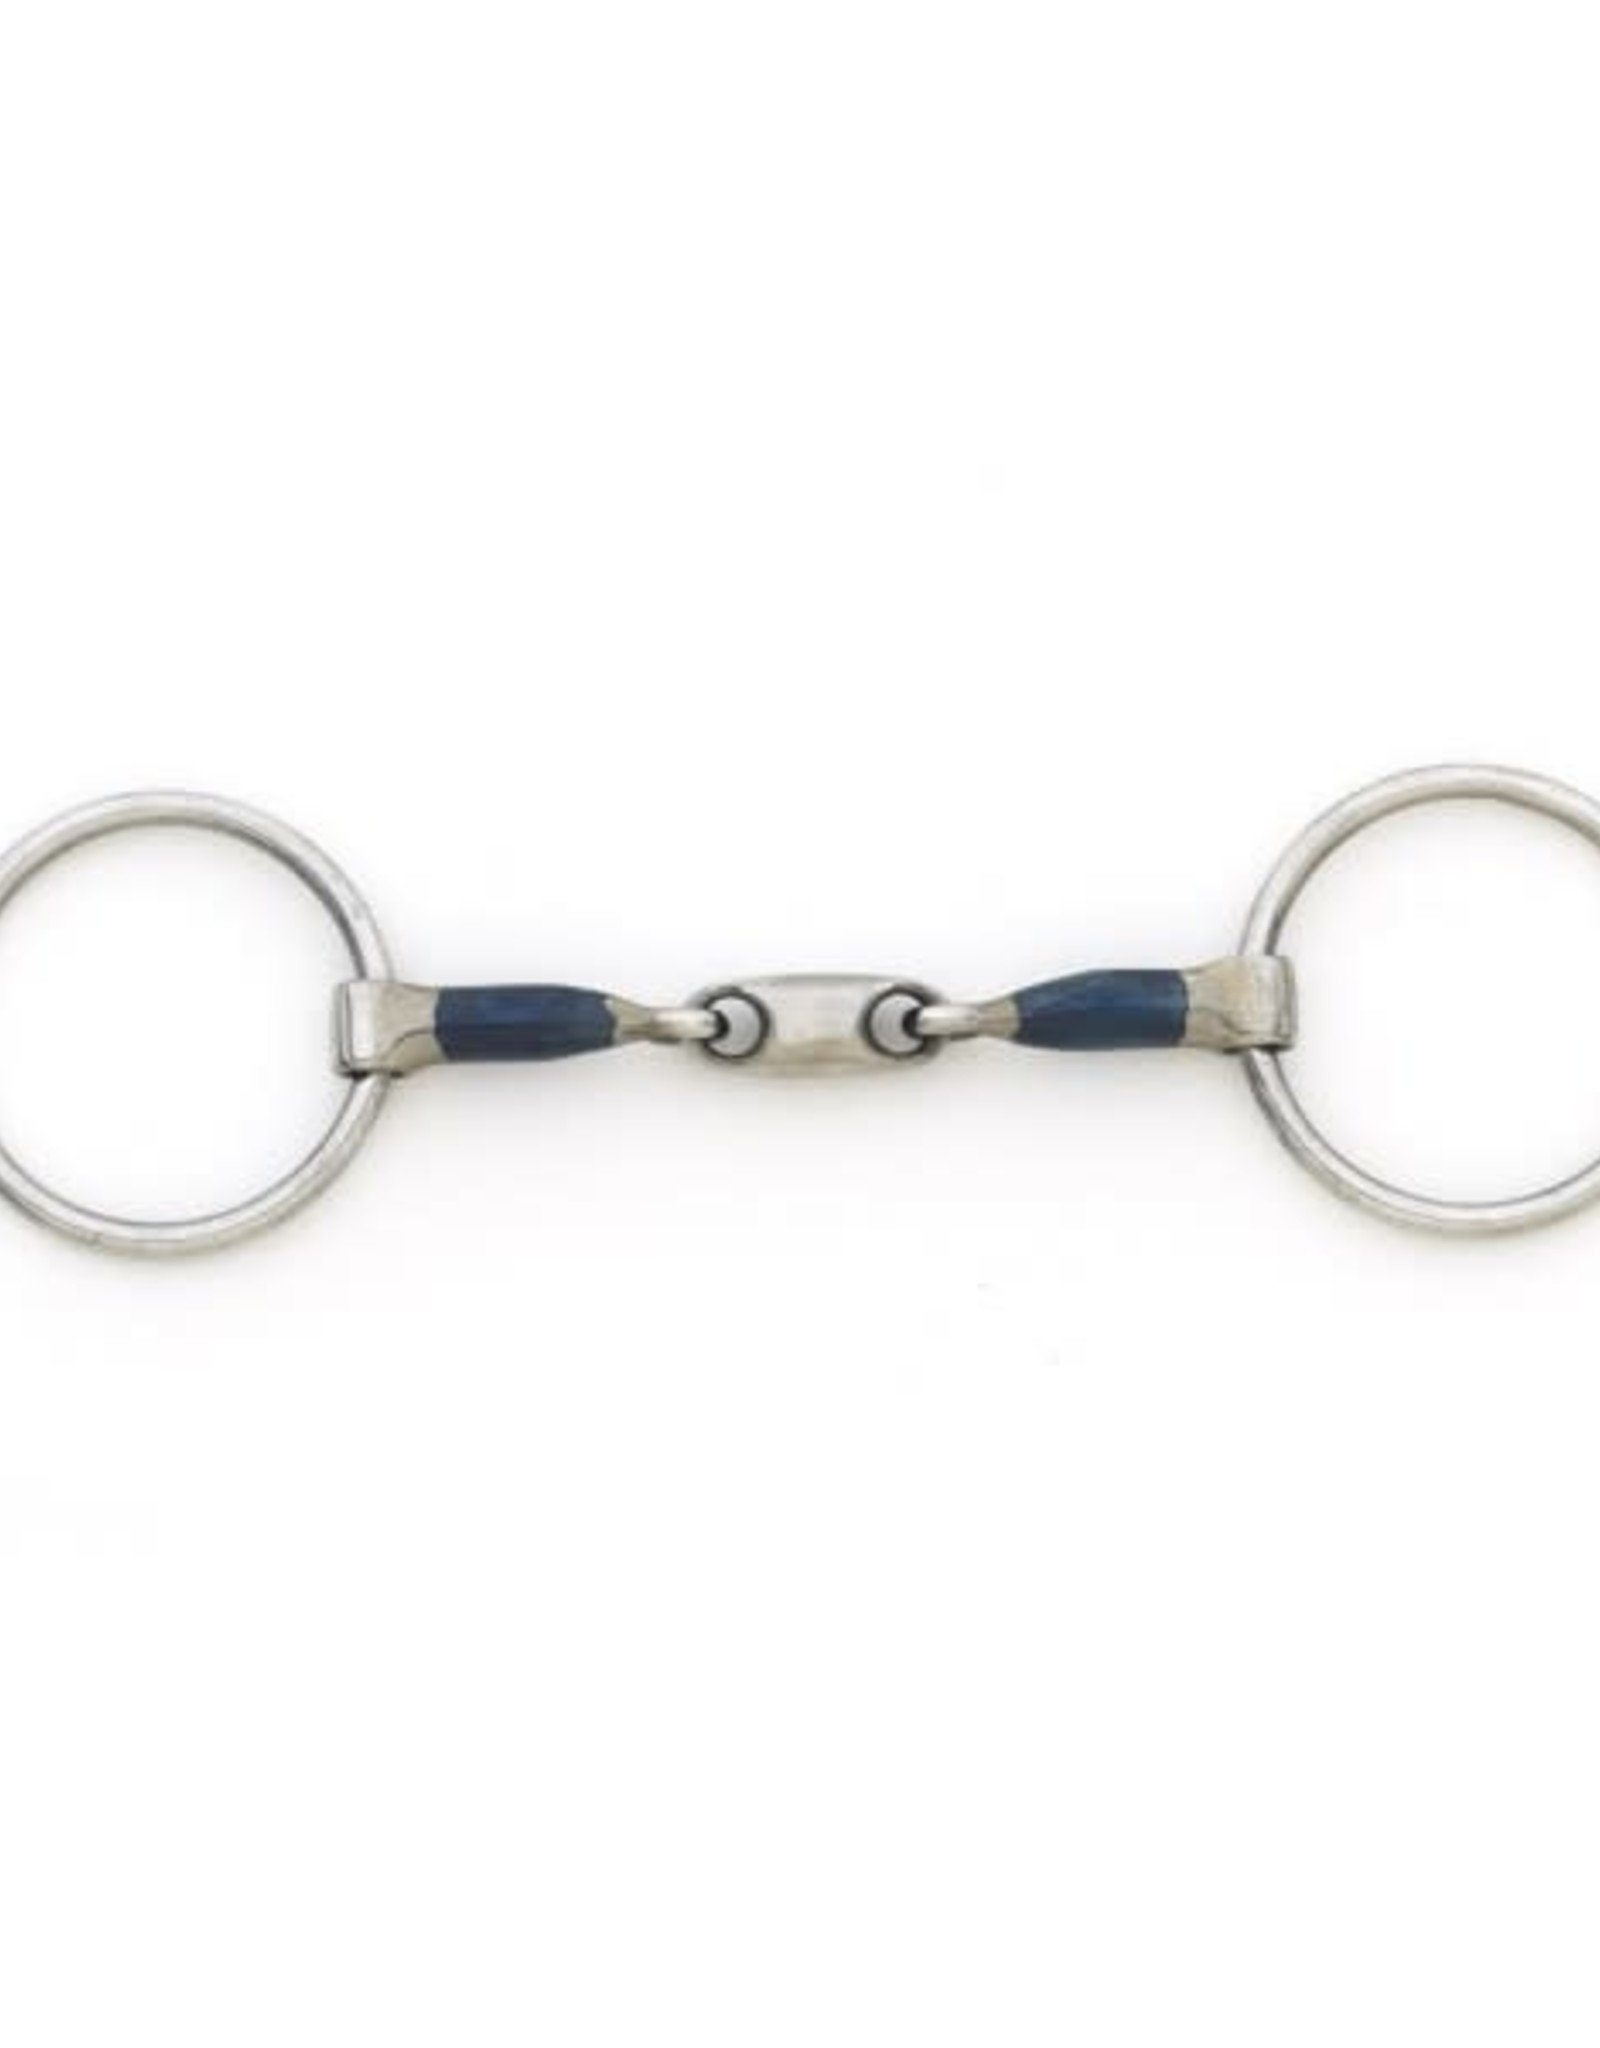 Centaur Blue Steel Oval Peanut Mouth Loose Ring